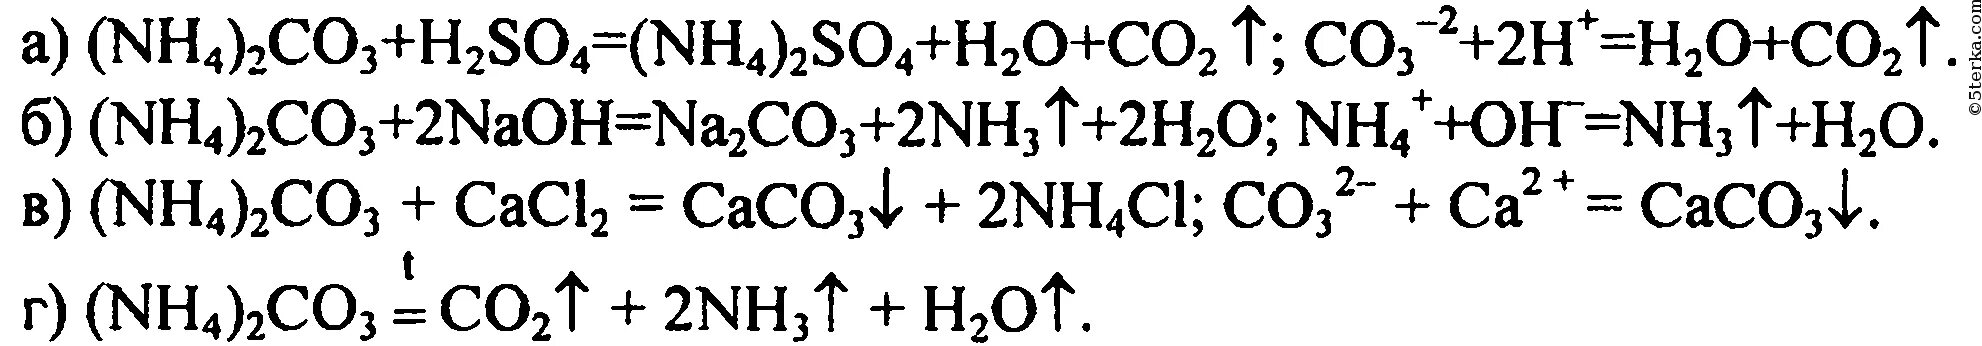 Реакция карбоната аммония взаимодействие с кислотой